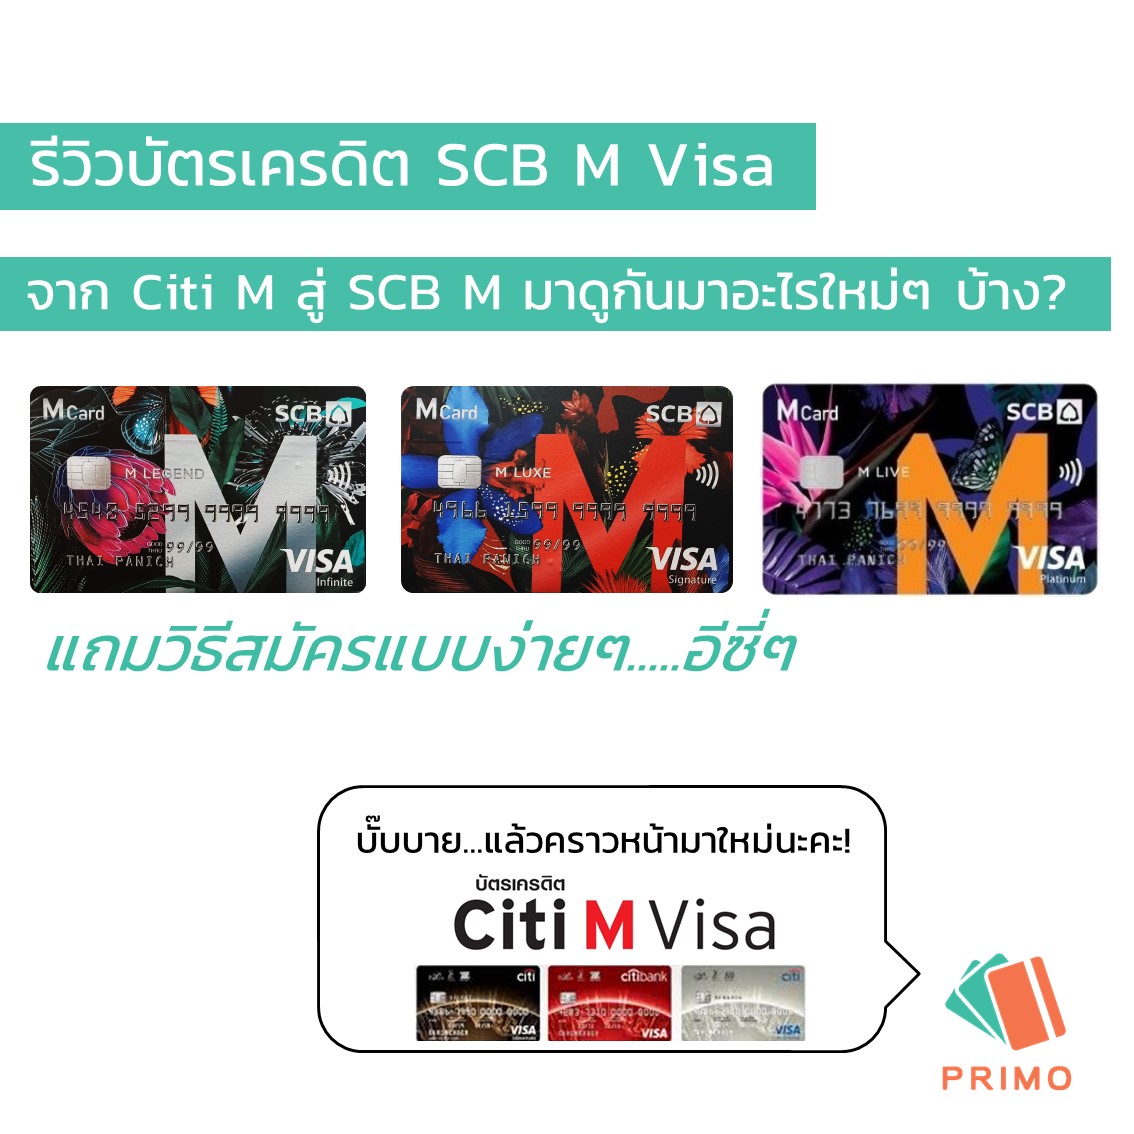 Cr] รีวิวบัตรเครดิต Scb M Visa โดยทีมงาน Primo - Pantip